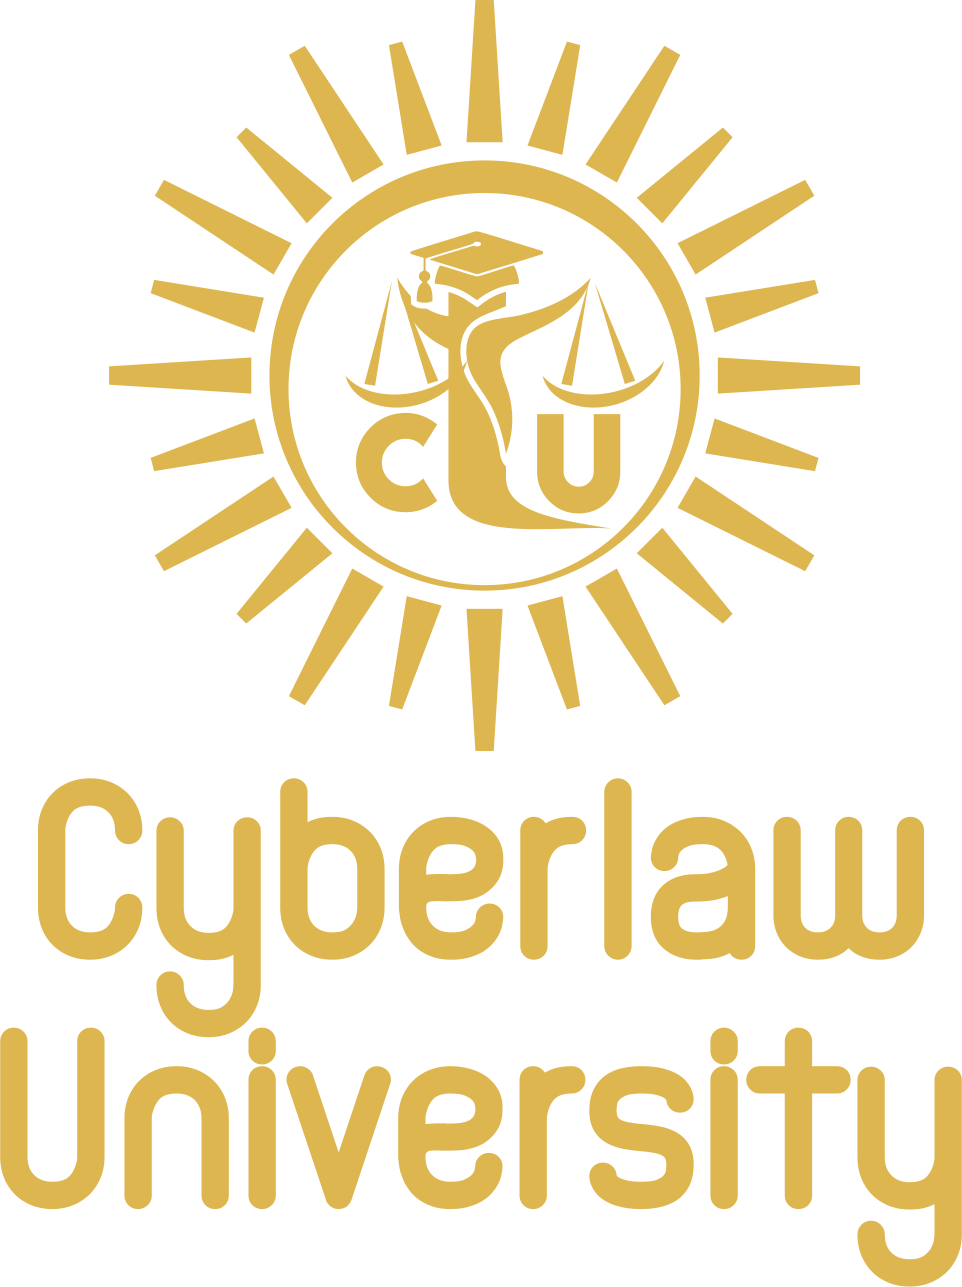 Cyberlaw University